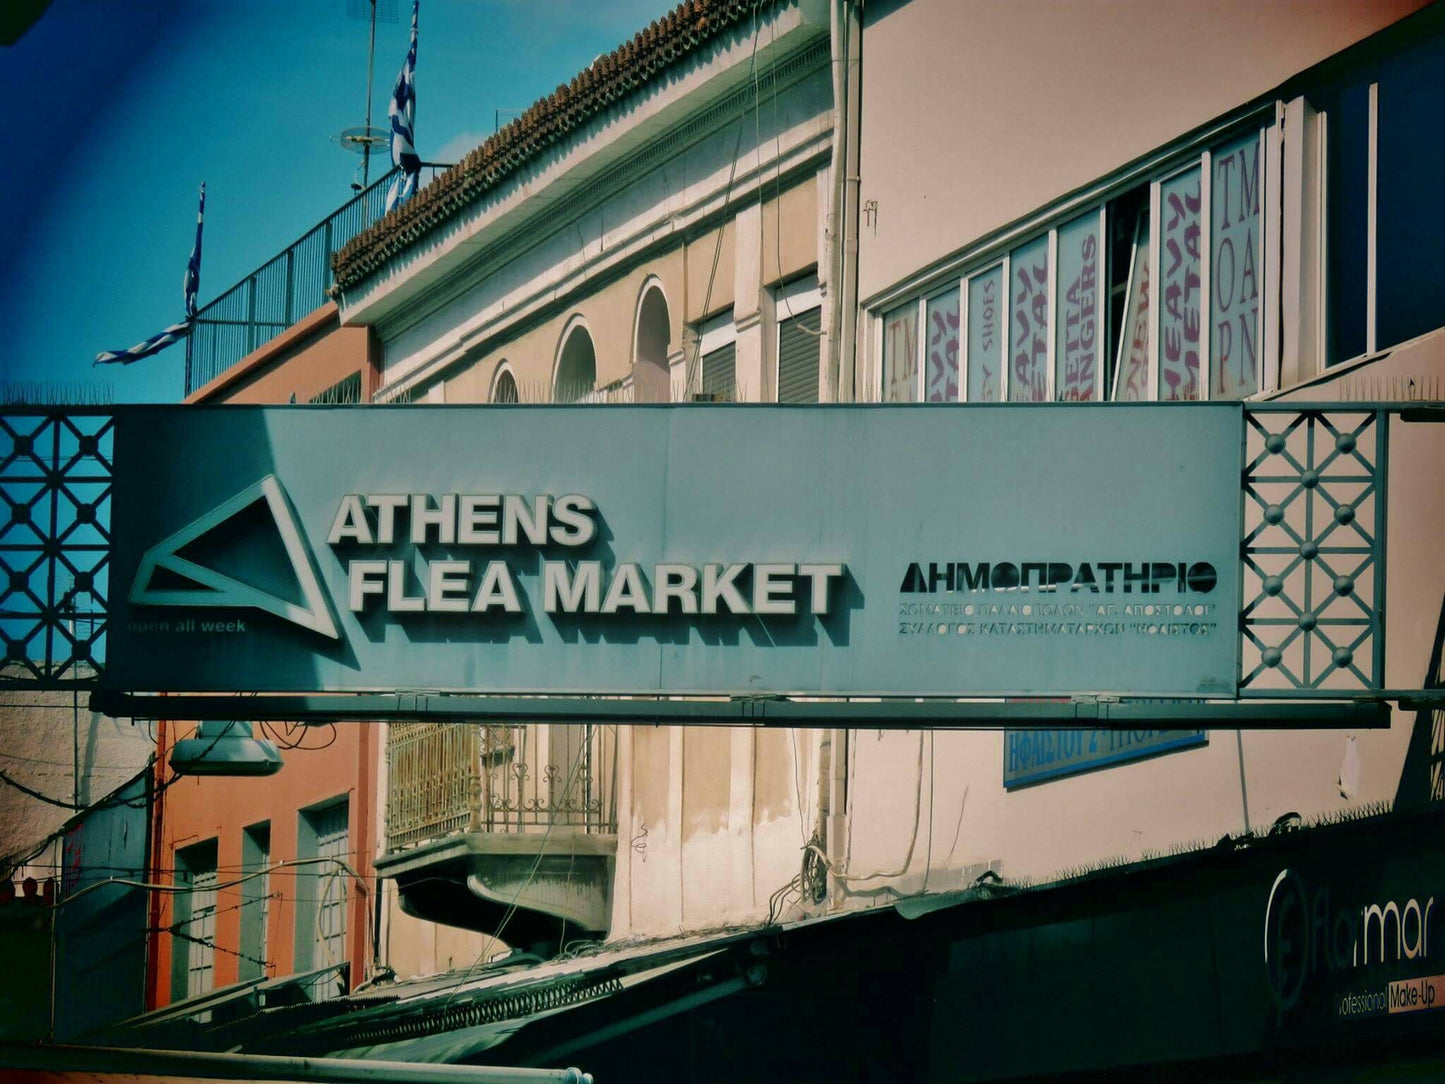 Athens Flea Market Retro Street Photography Print